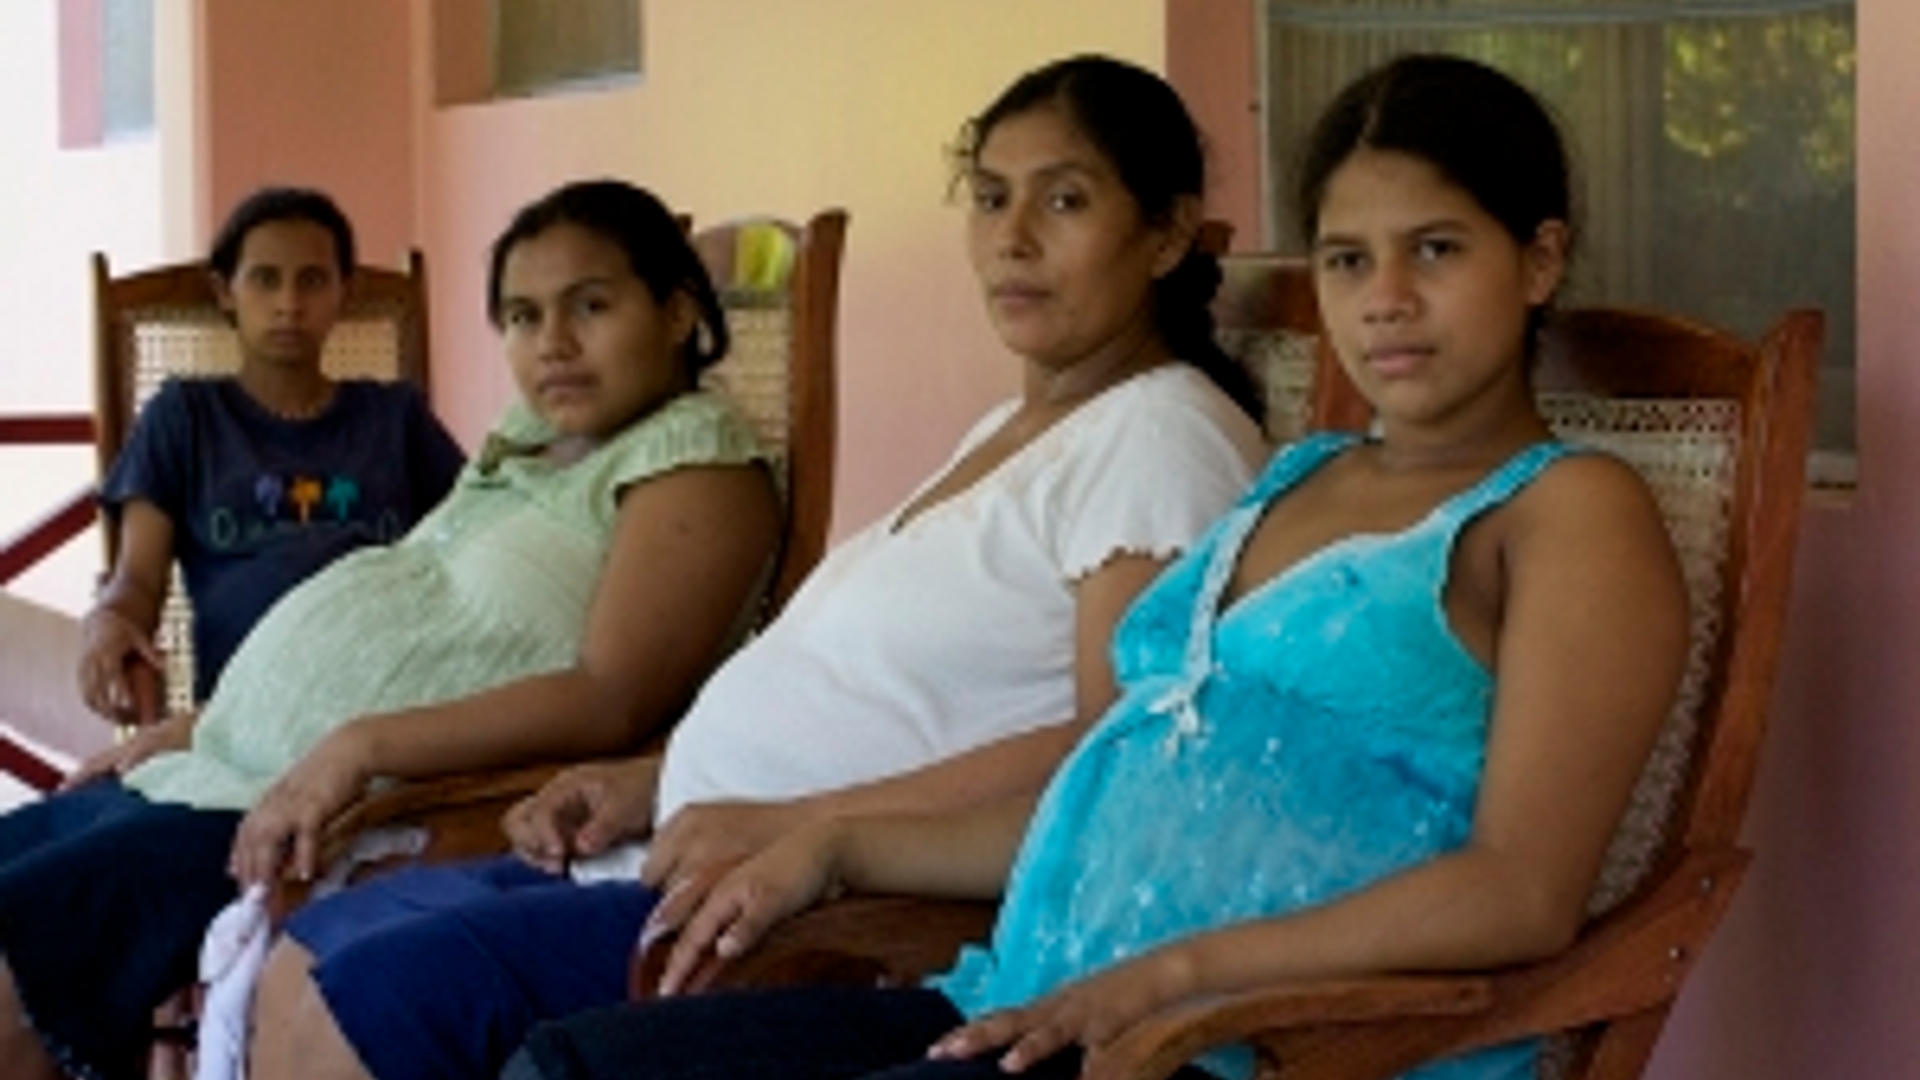 zwangere_vrouwen_nicaragua_300.jpg